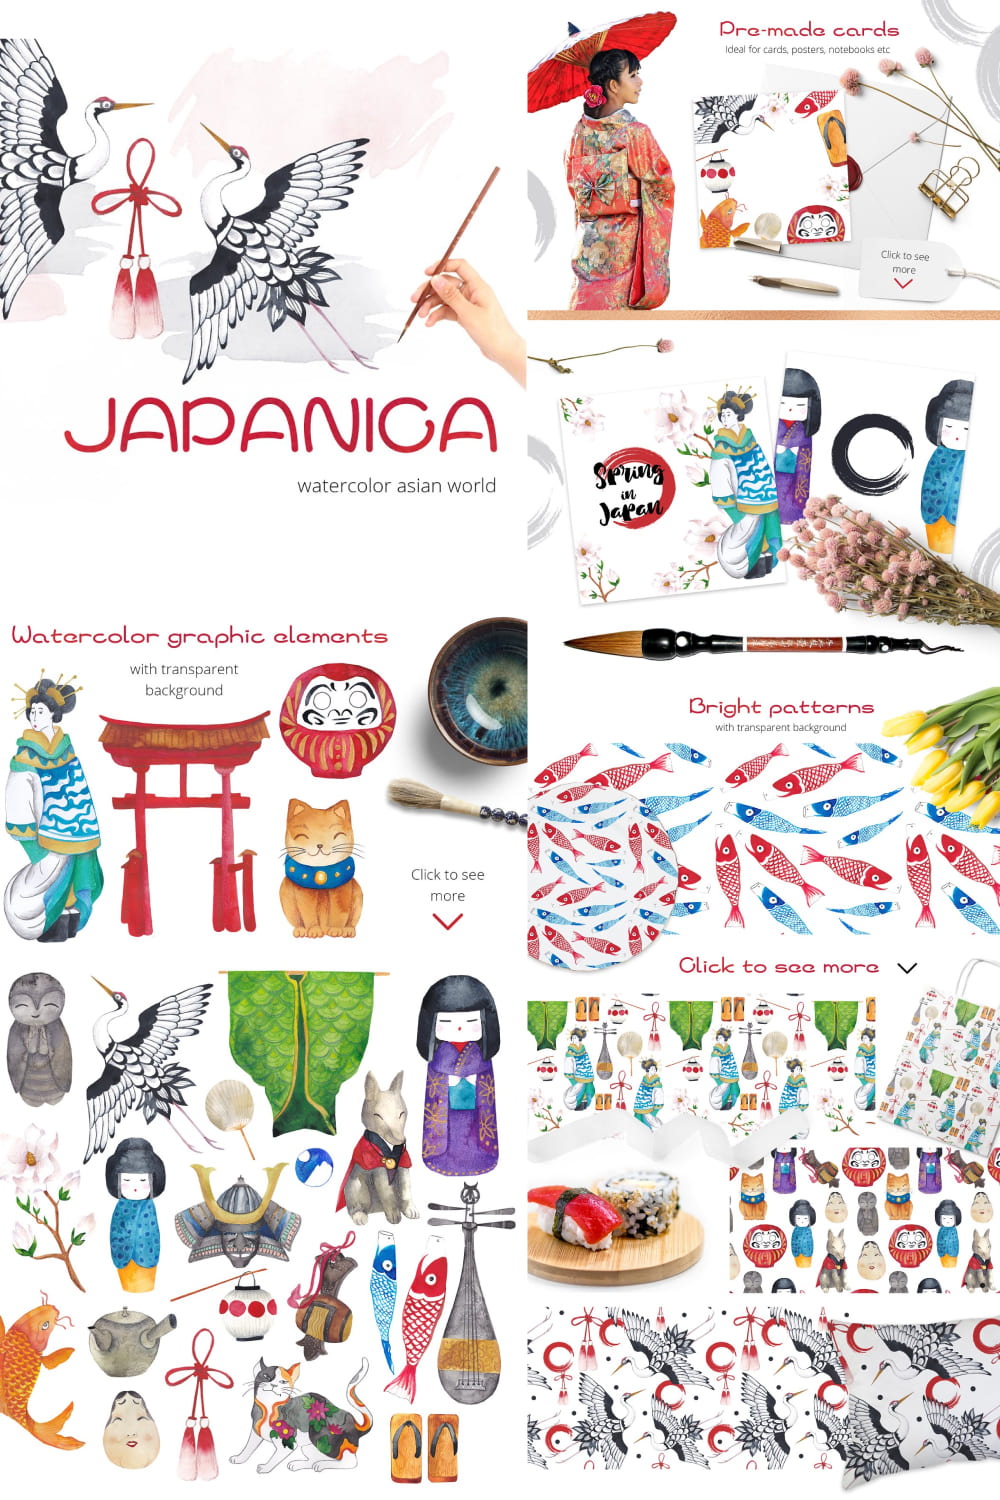 Japan watercolor graphic set - pinterest image preview.